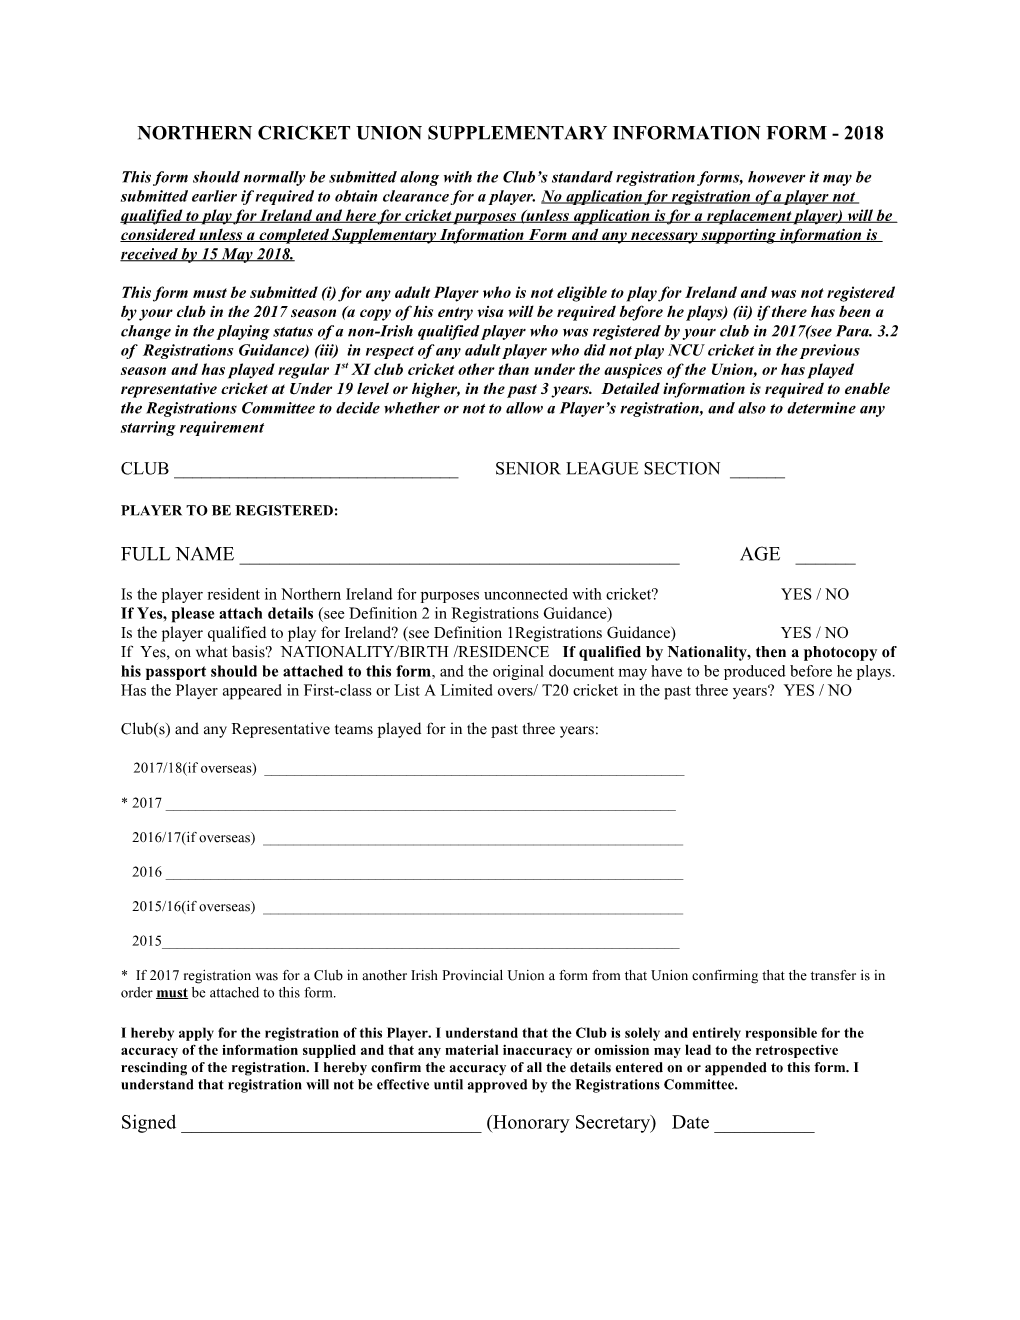 Northern Cricket Unionsupplementary Information Form - 2018